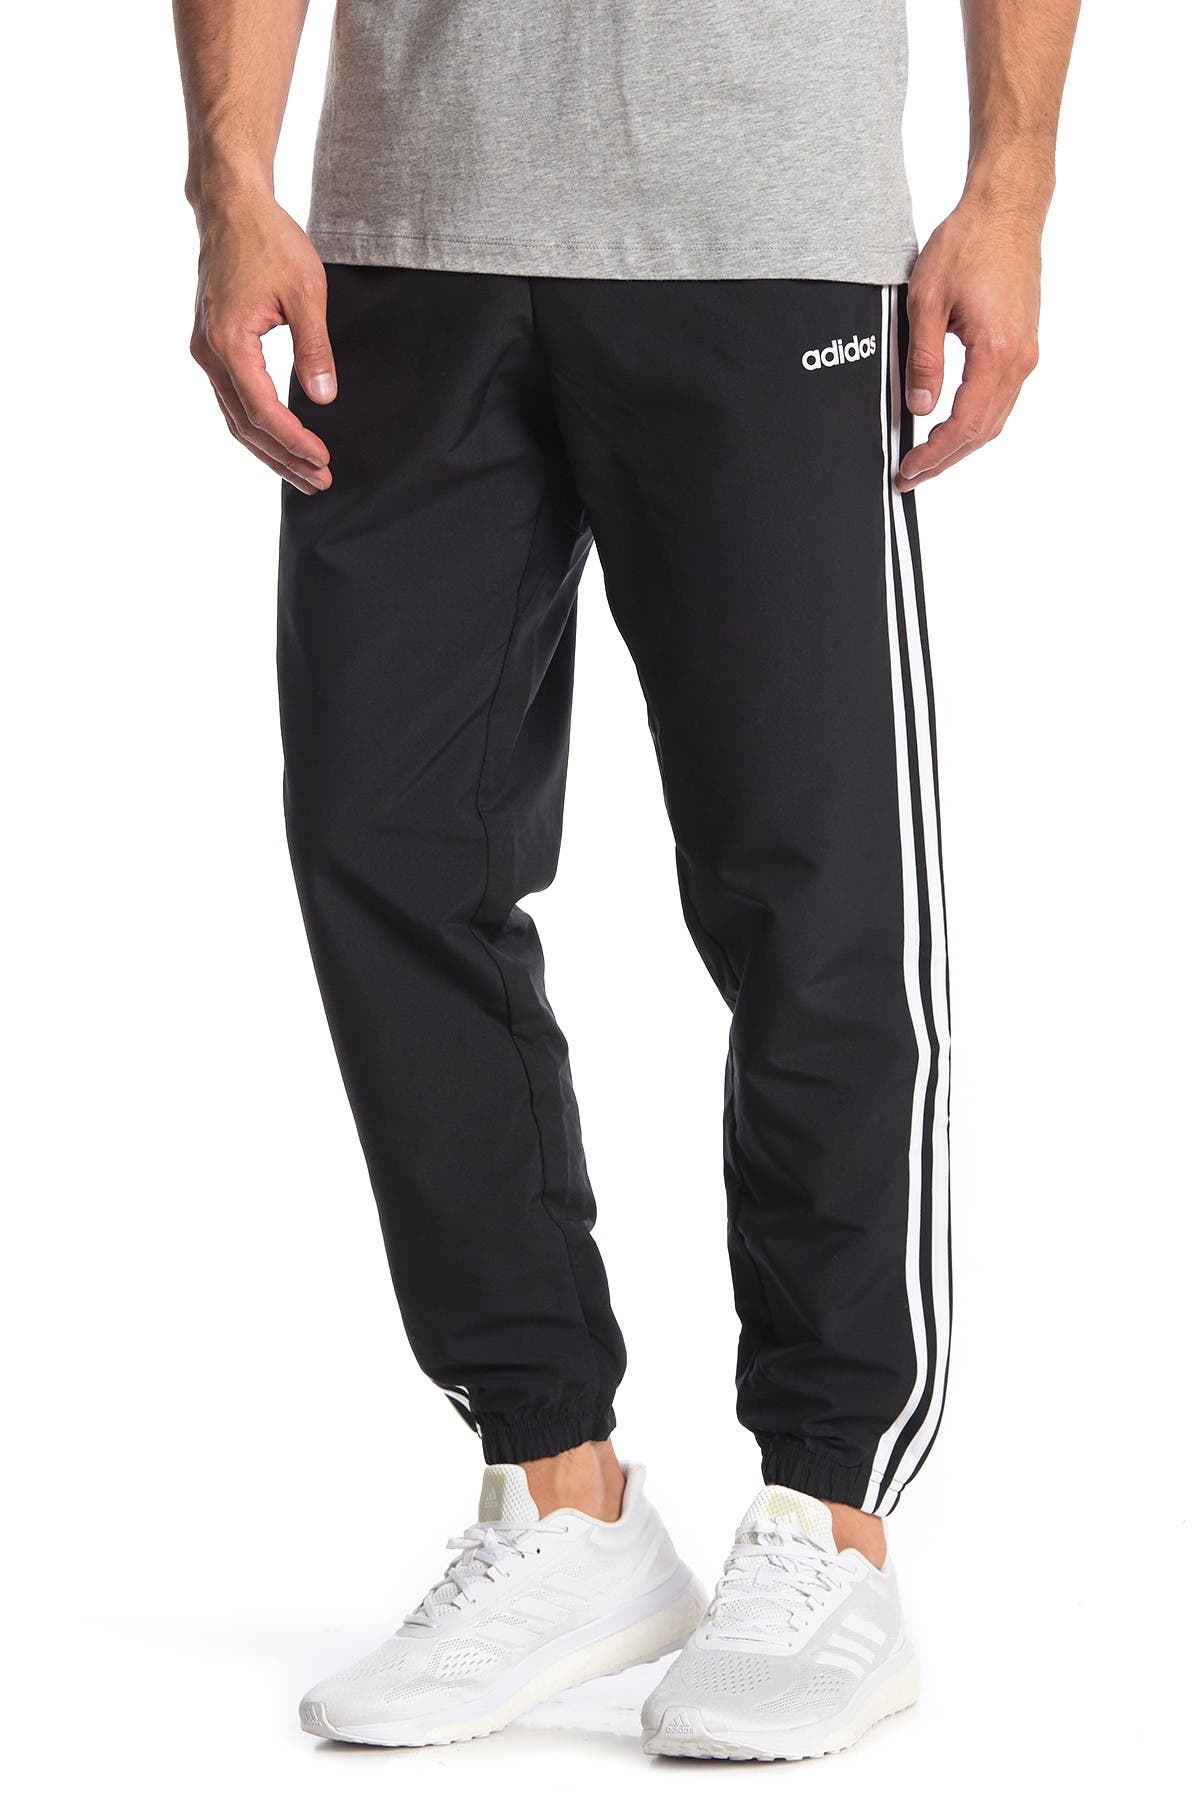 Adidas Originals Essentials 3-stripes Wind Pants In Black/whit | ModeSens